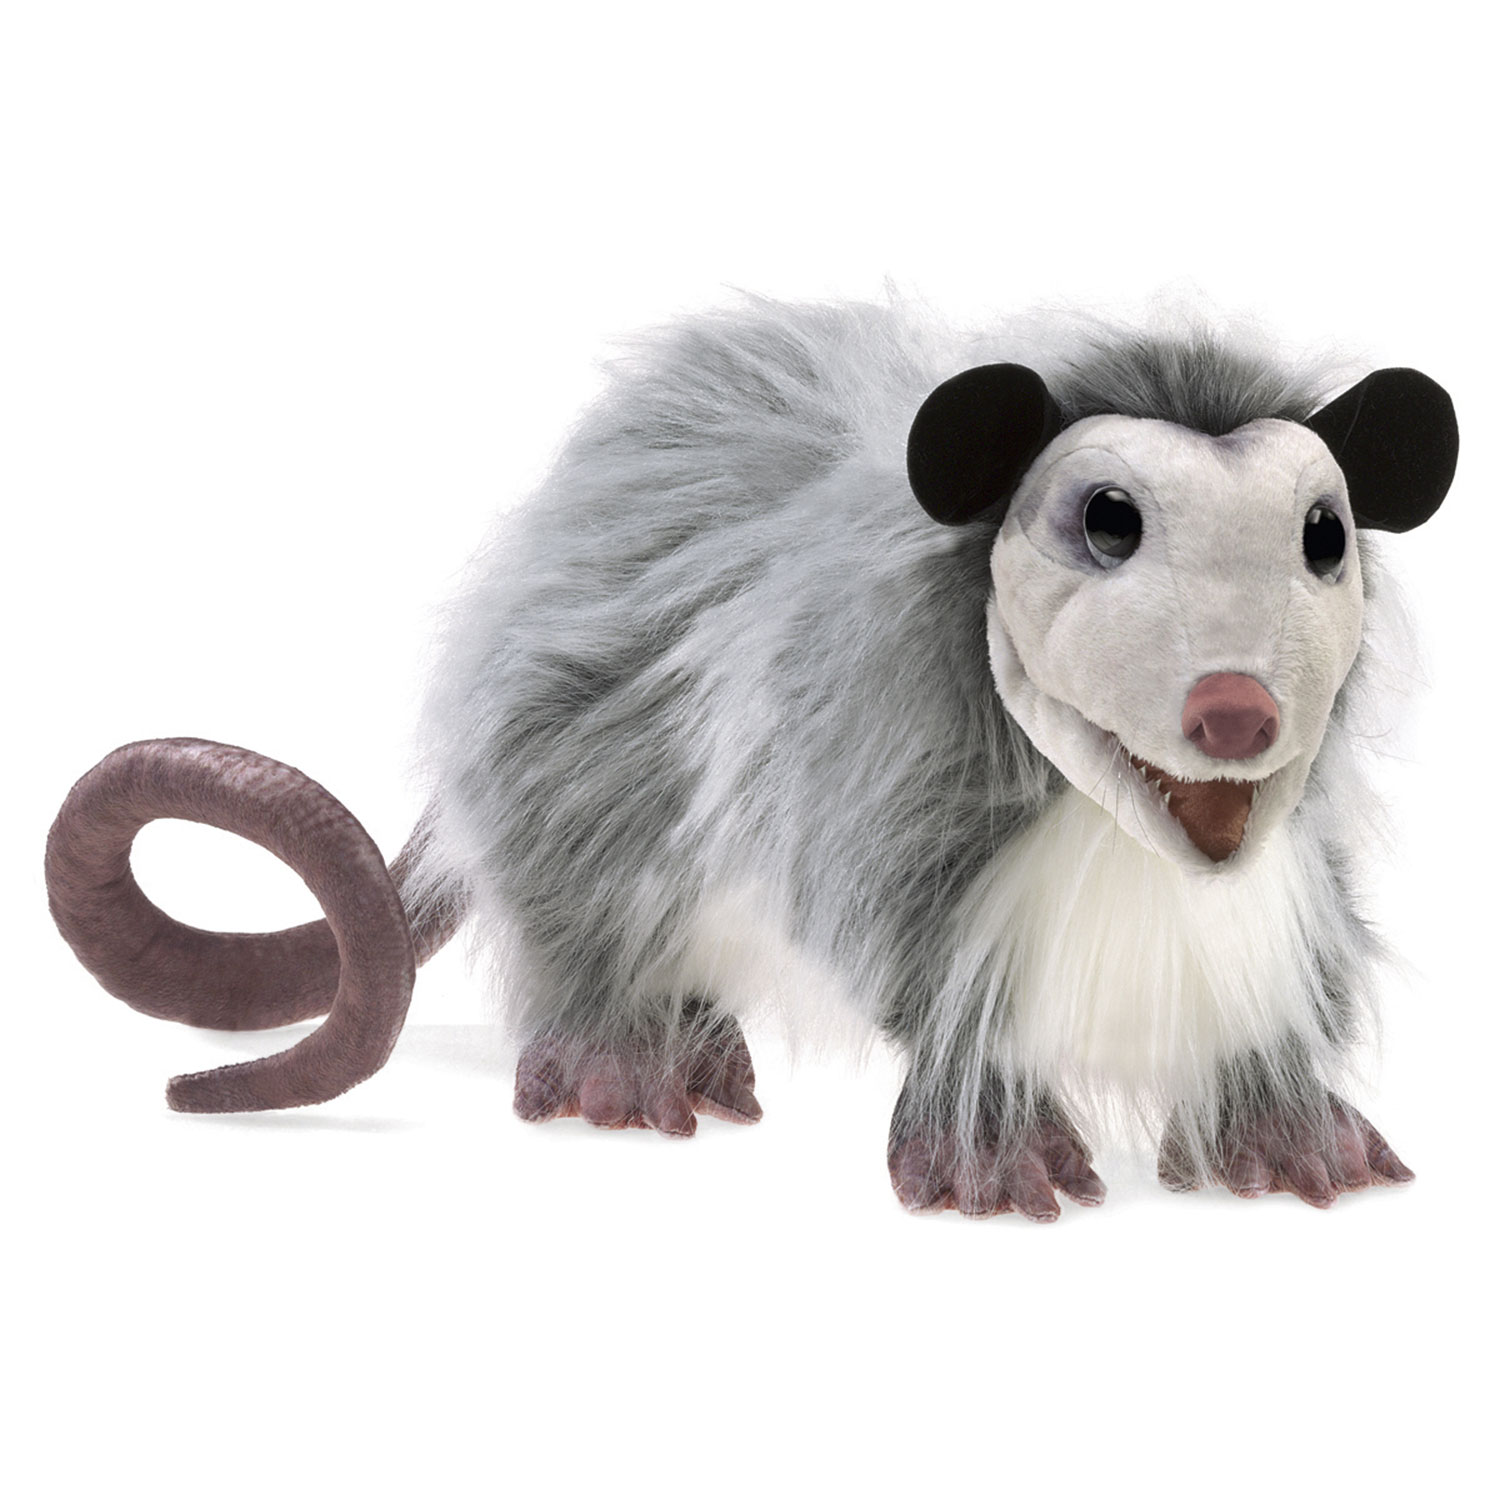 Opossum / Opossum (New version)